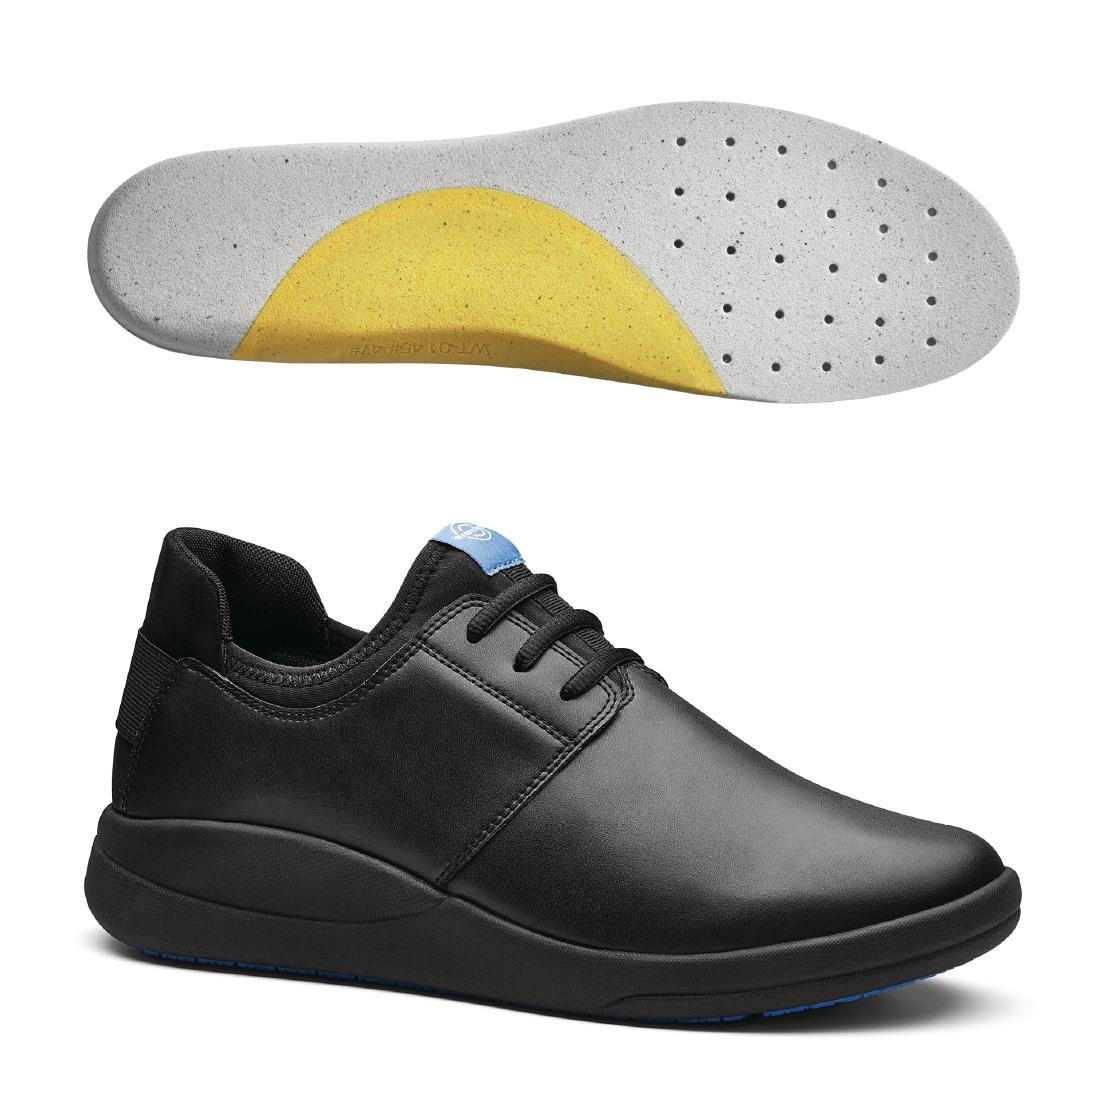 WearerTech Relieve Shoe Black with Soft Insoles Size 38